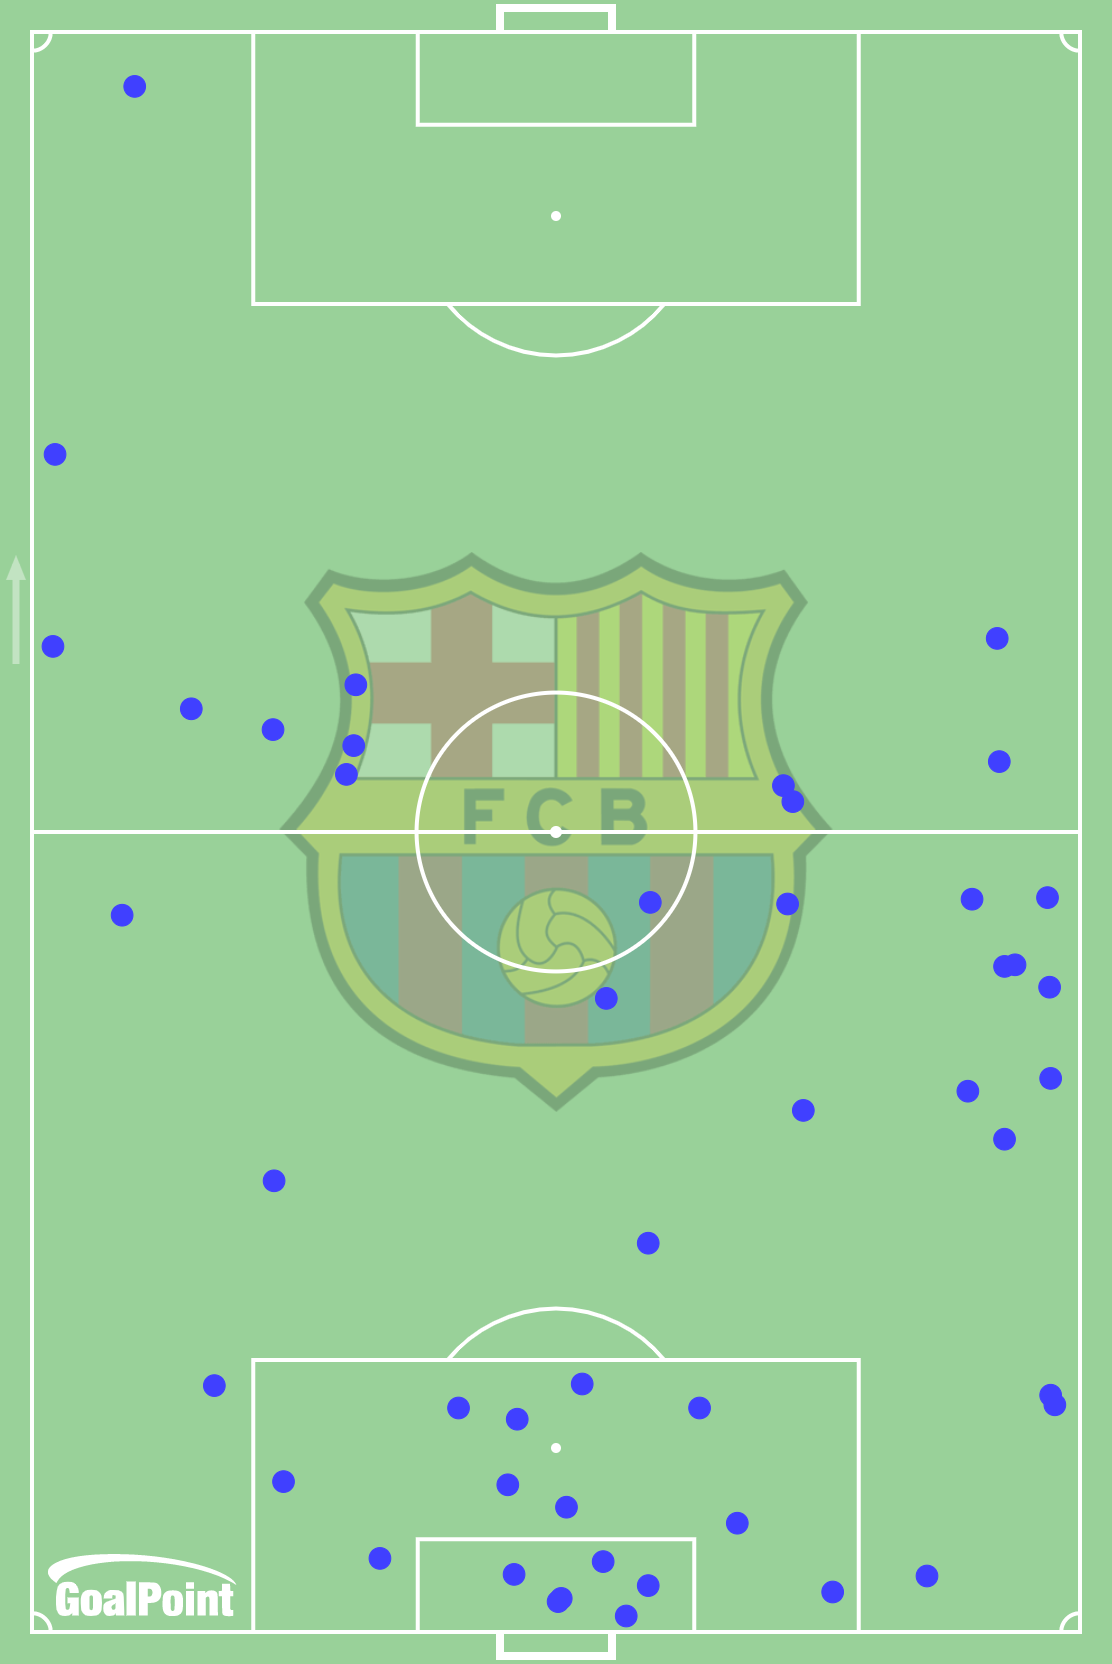 GoalPoint-Barcelona-Getafe-LaLiga-Defensive-Actions-202122